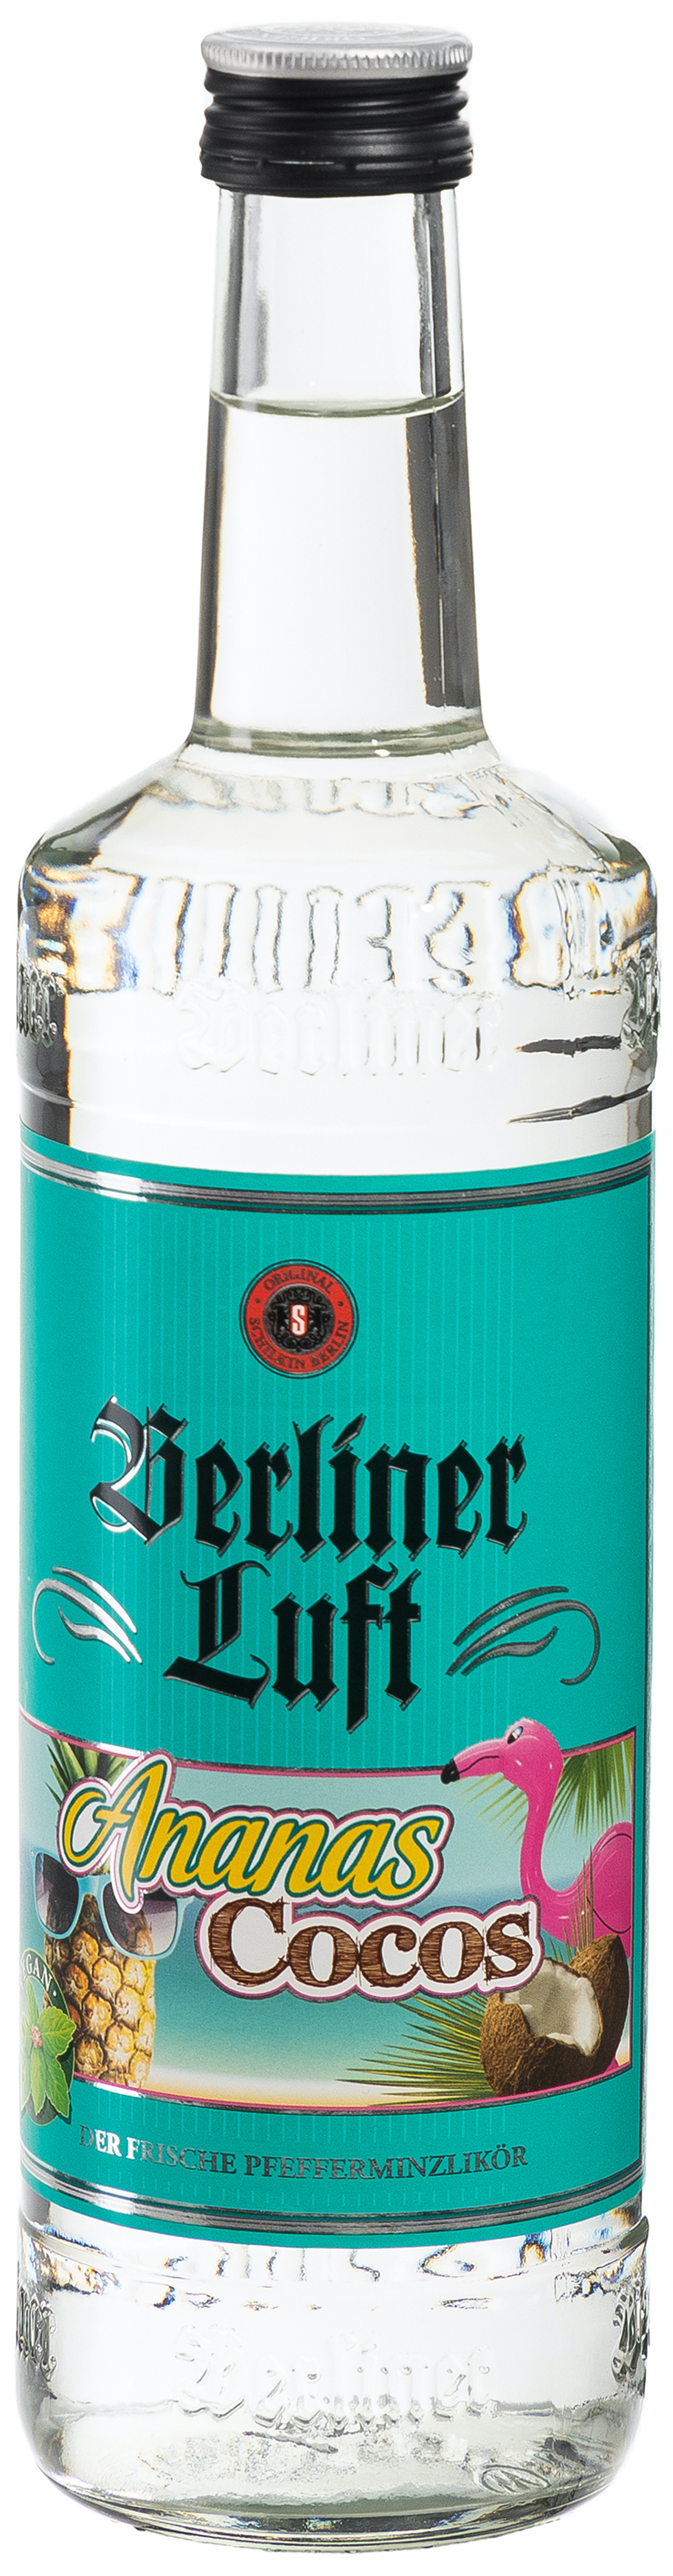 Berliner Luft Pfefferminzlikör vol. 18% 0,7l Chilleoké